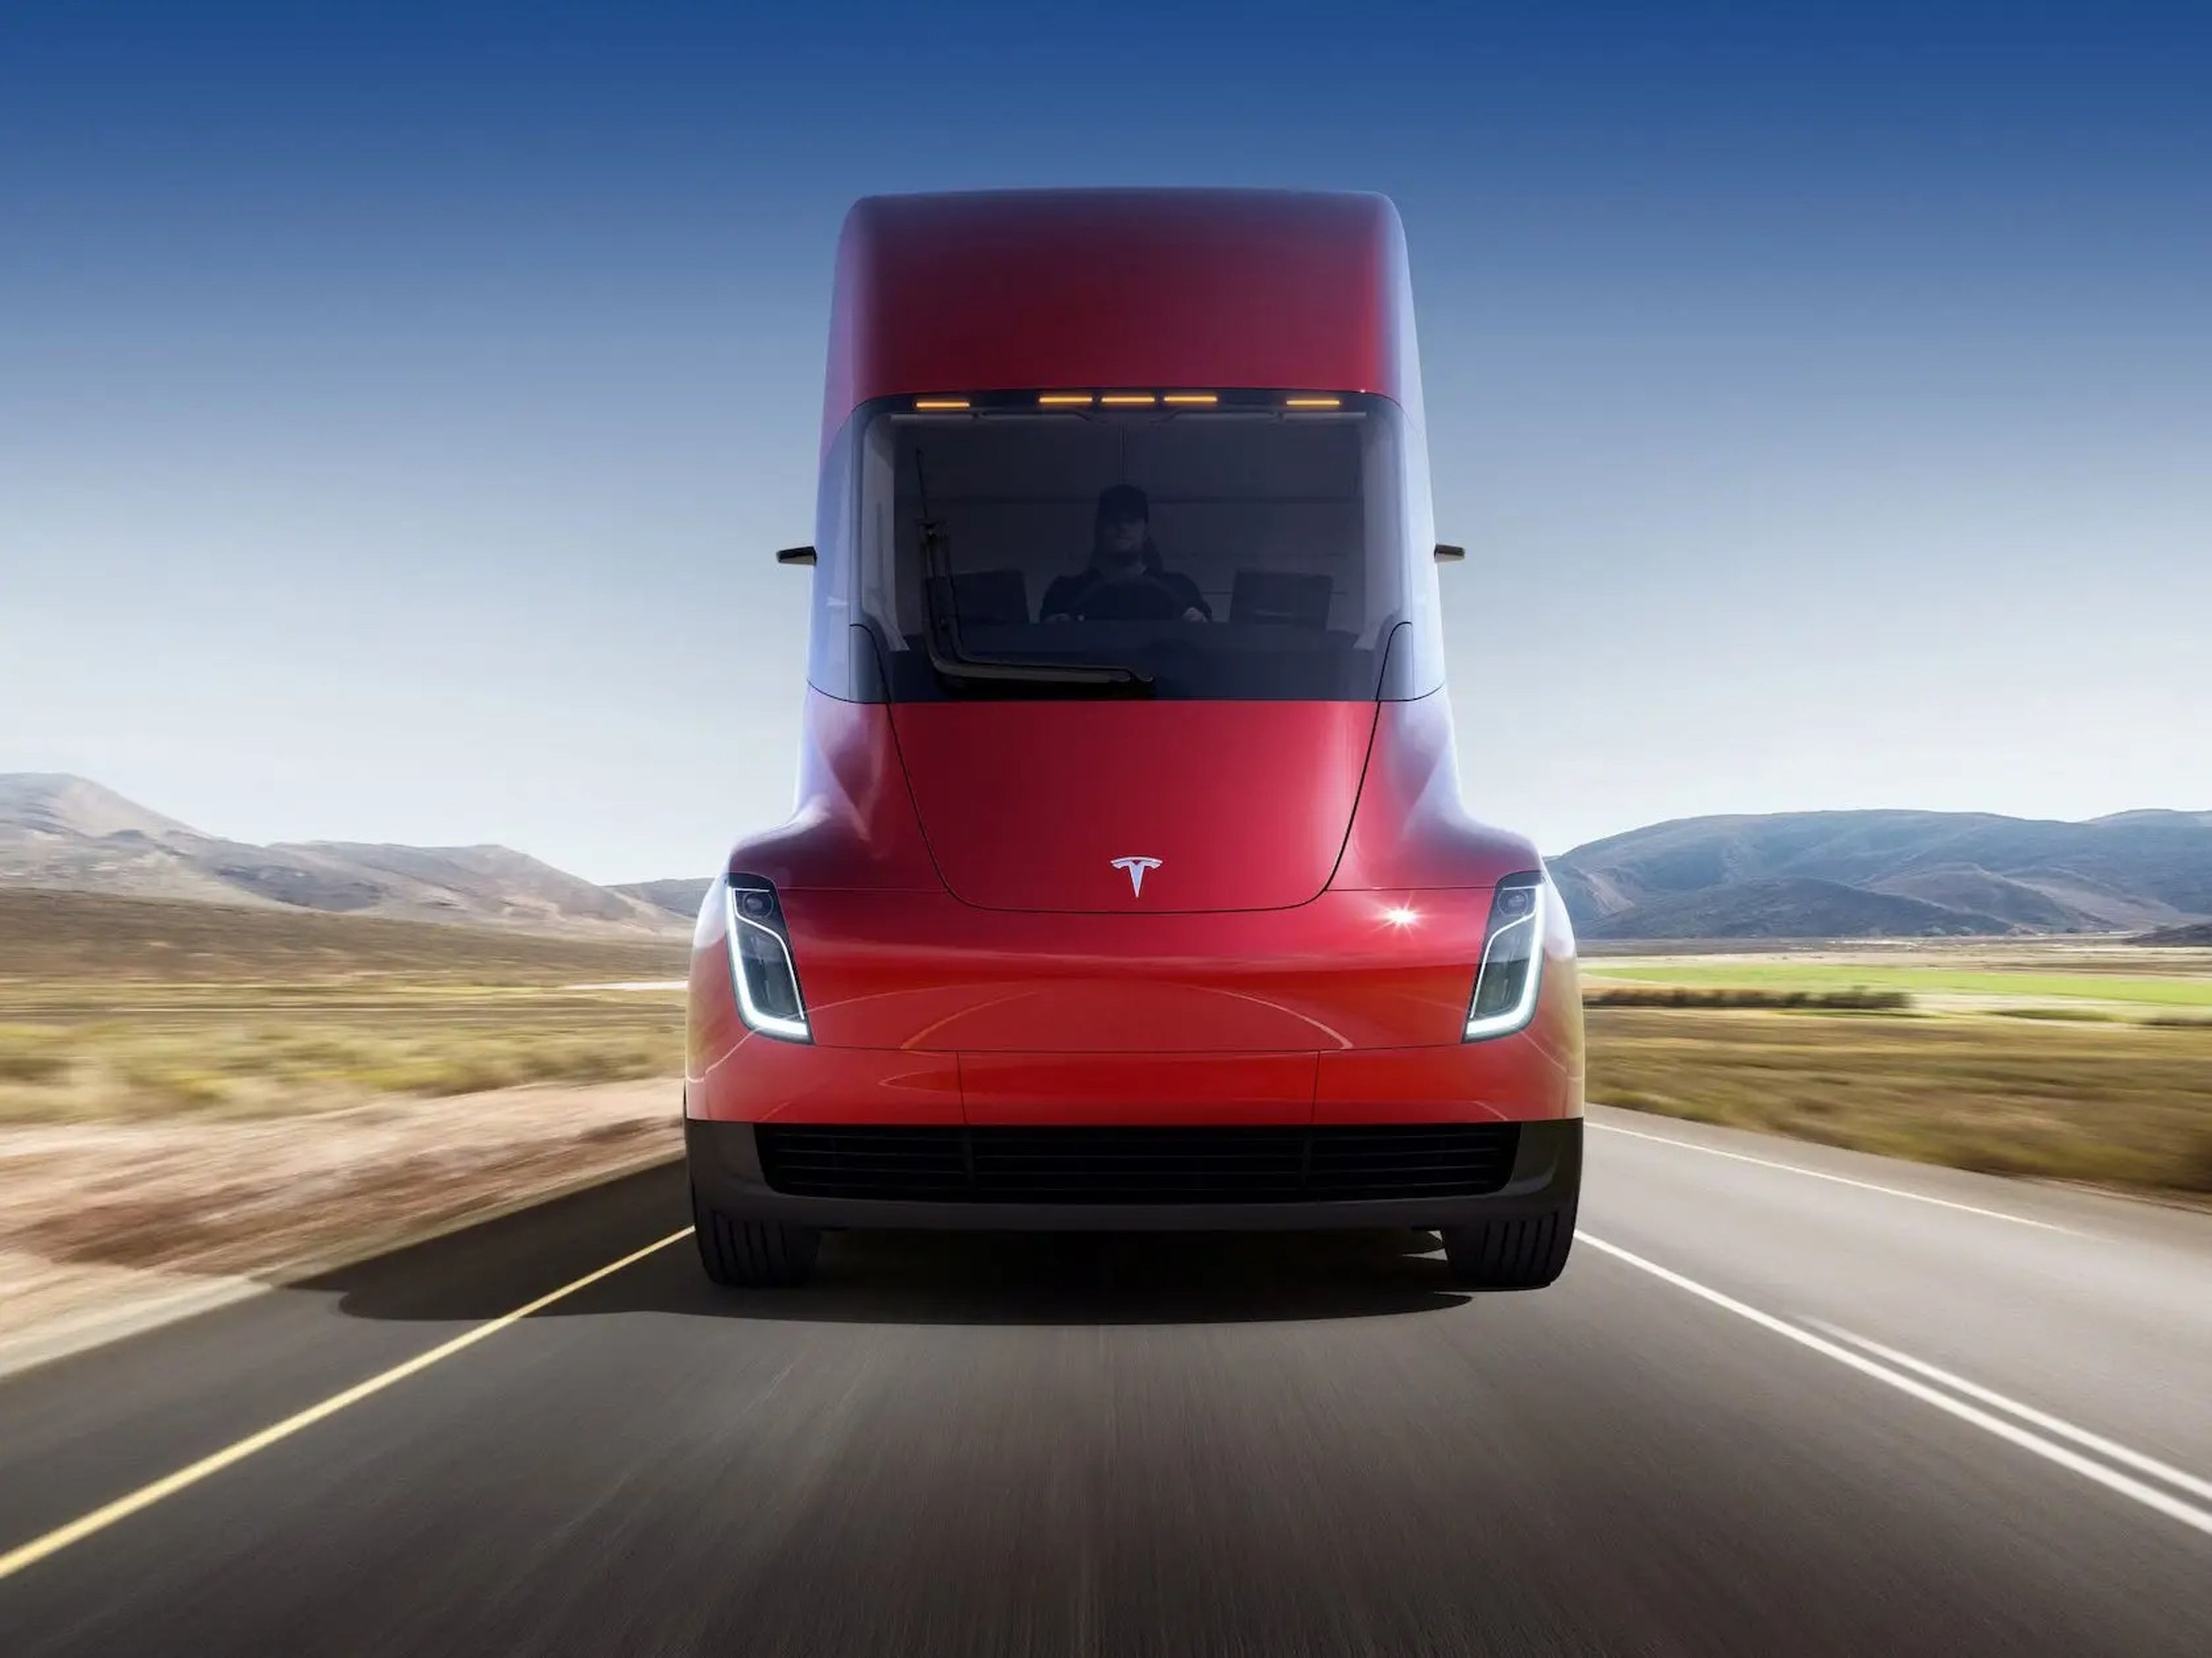 The Semi truck.Tesla